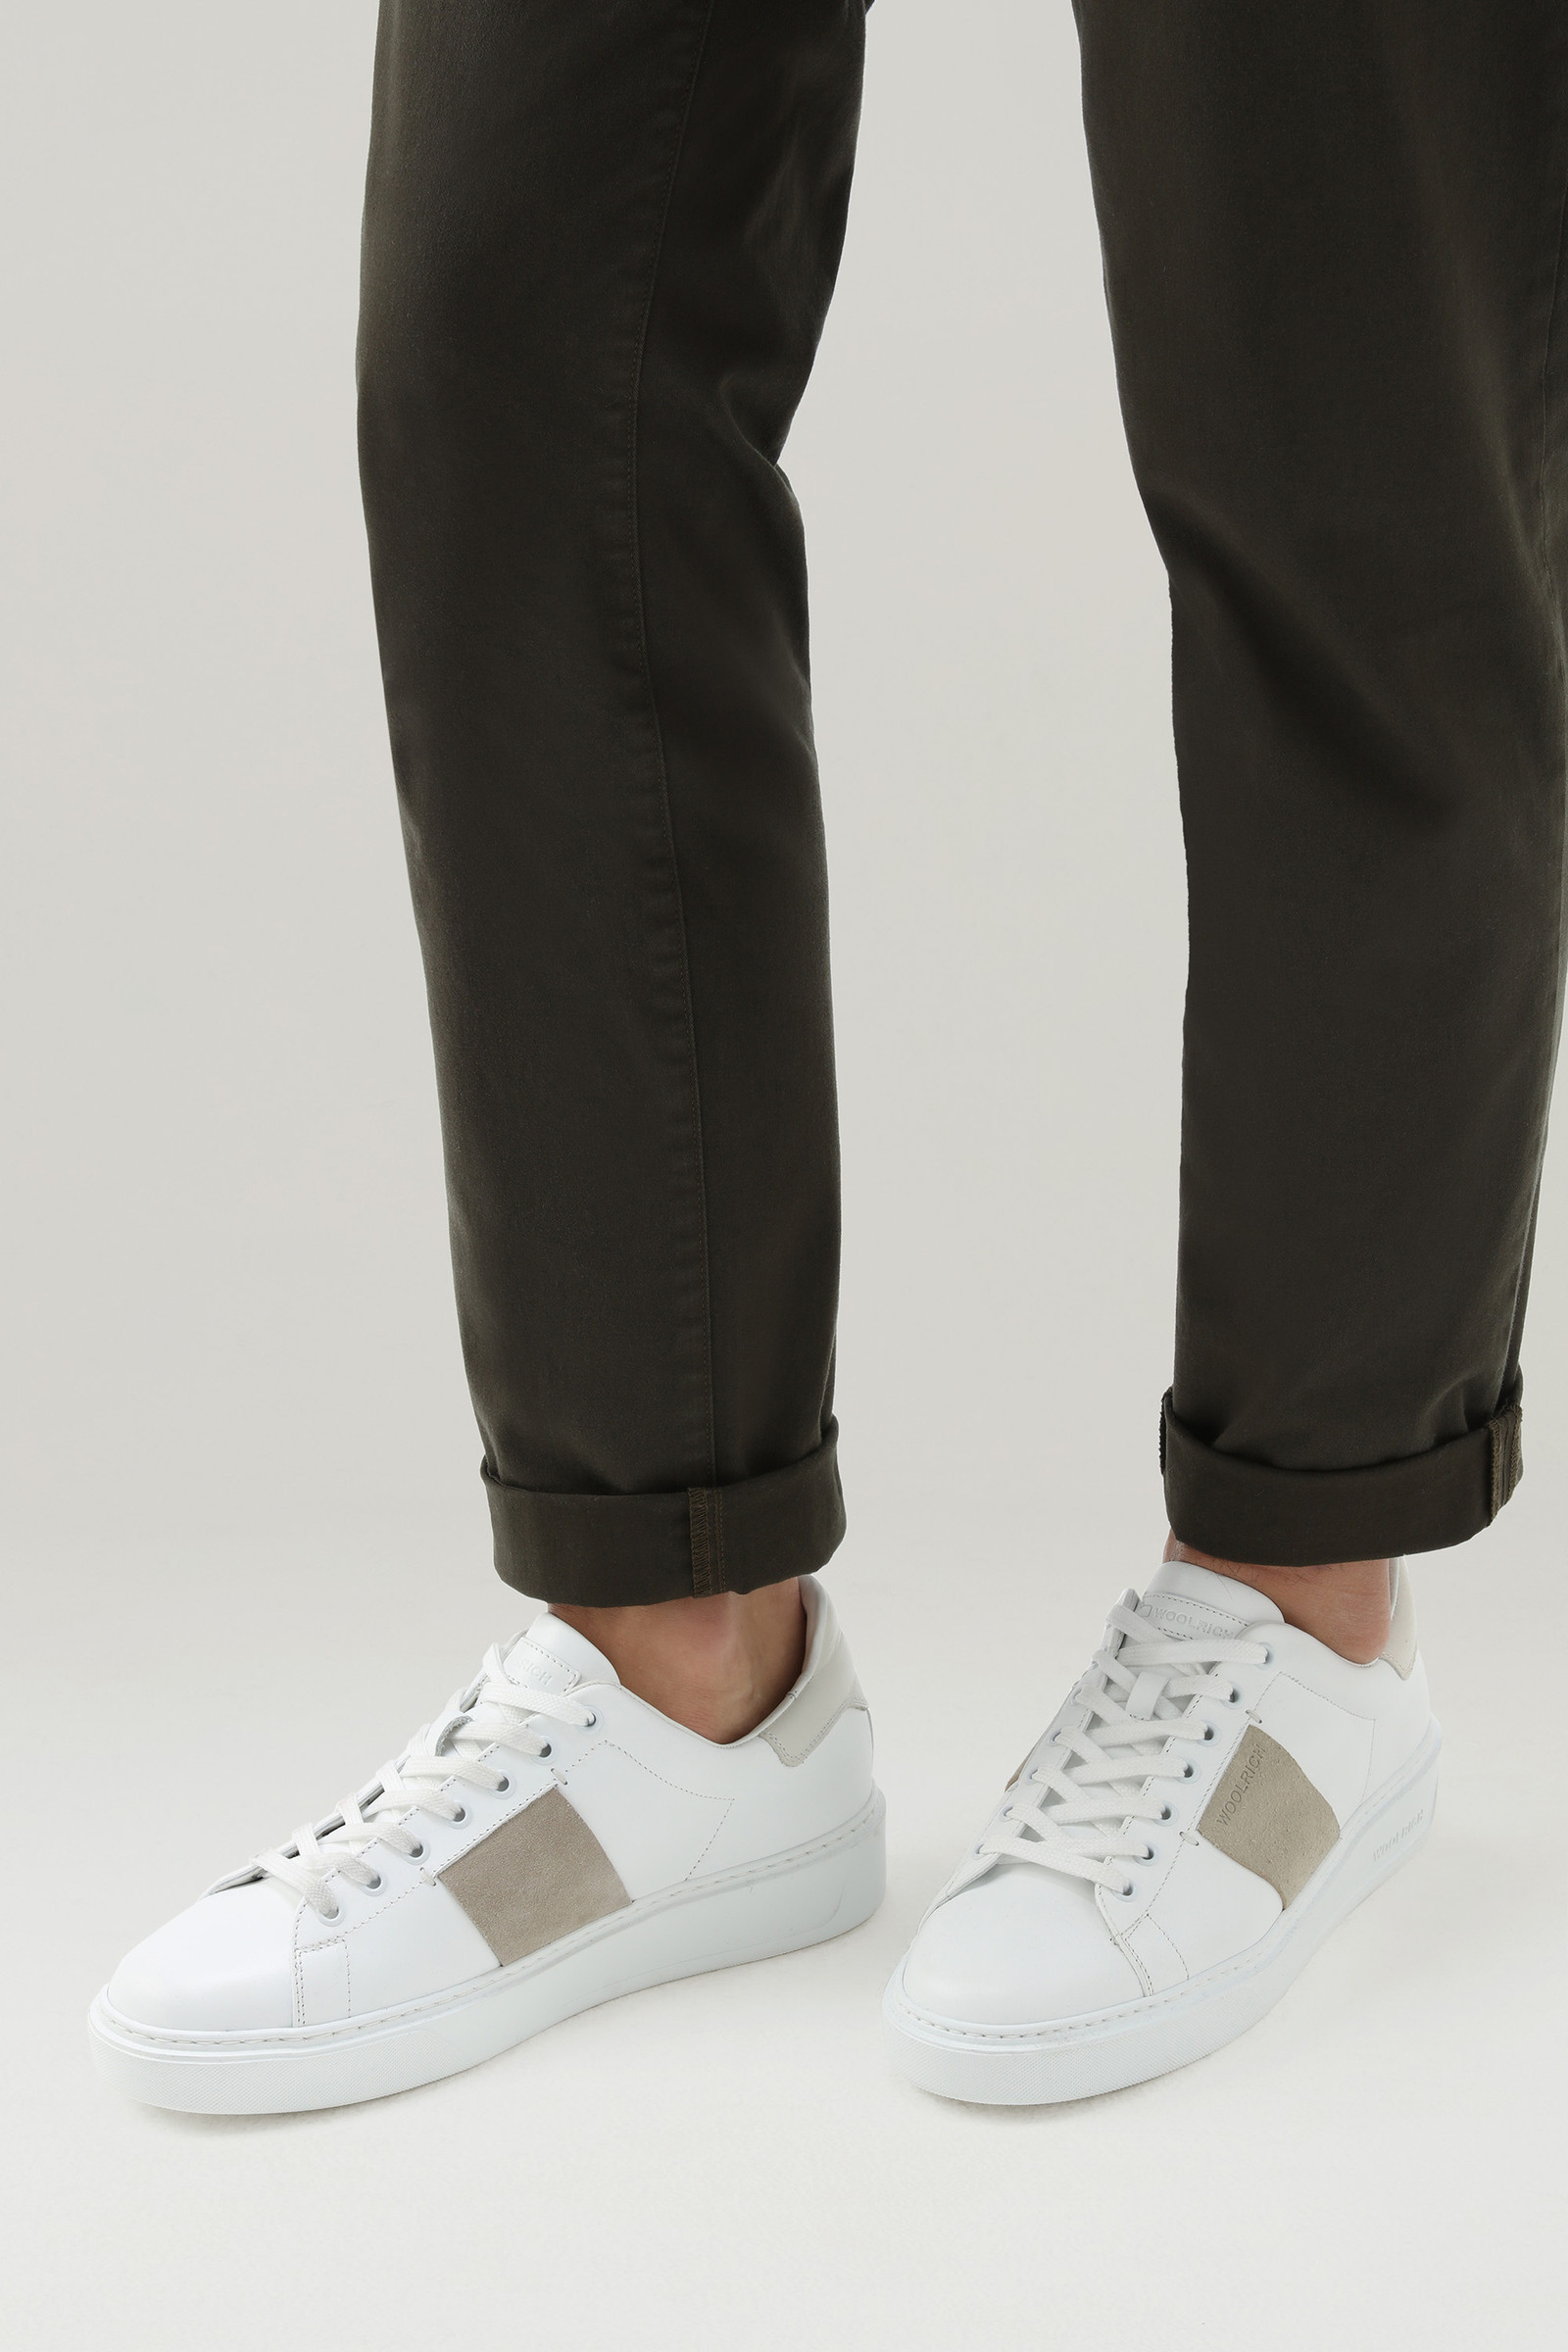 Axel Arigato Court leather sneakers - White